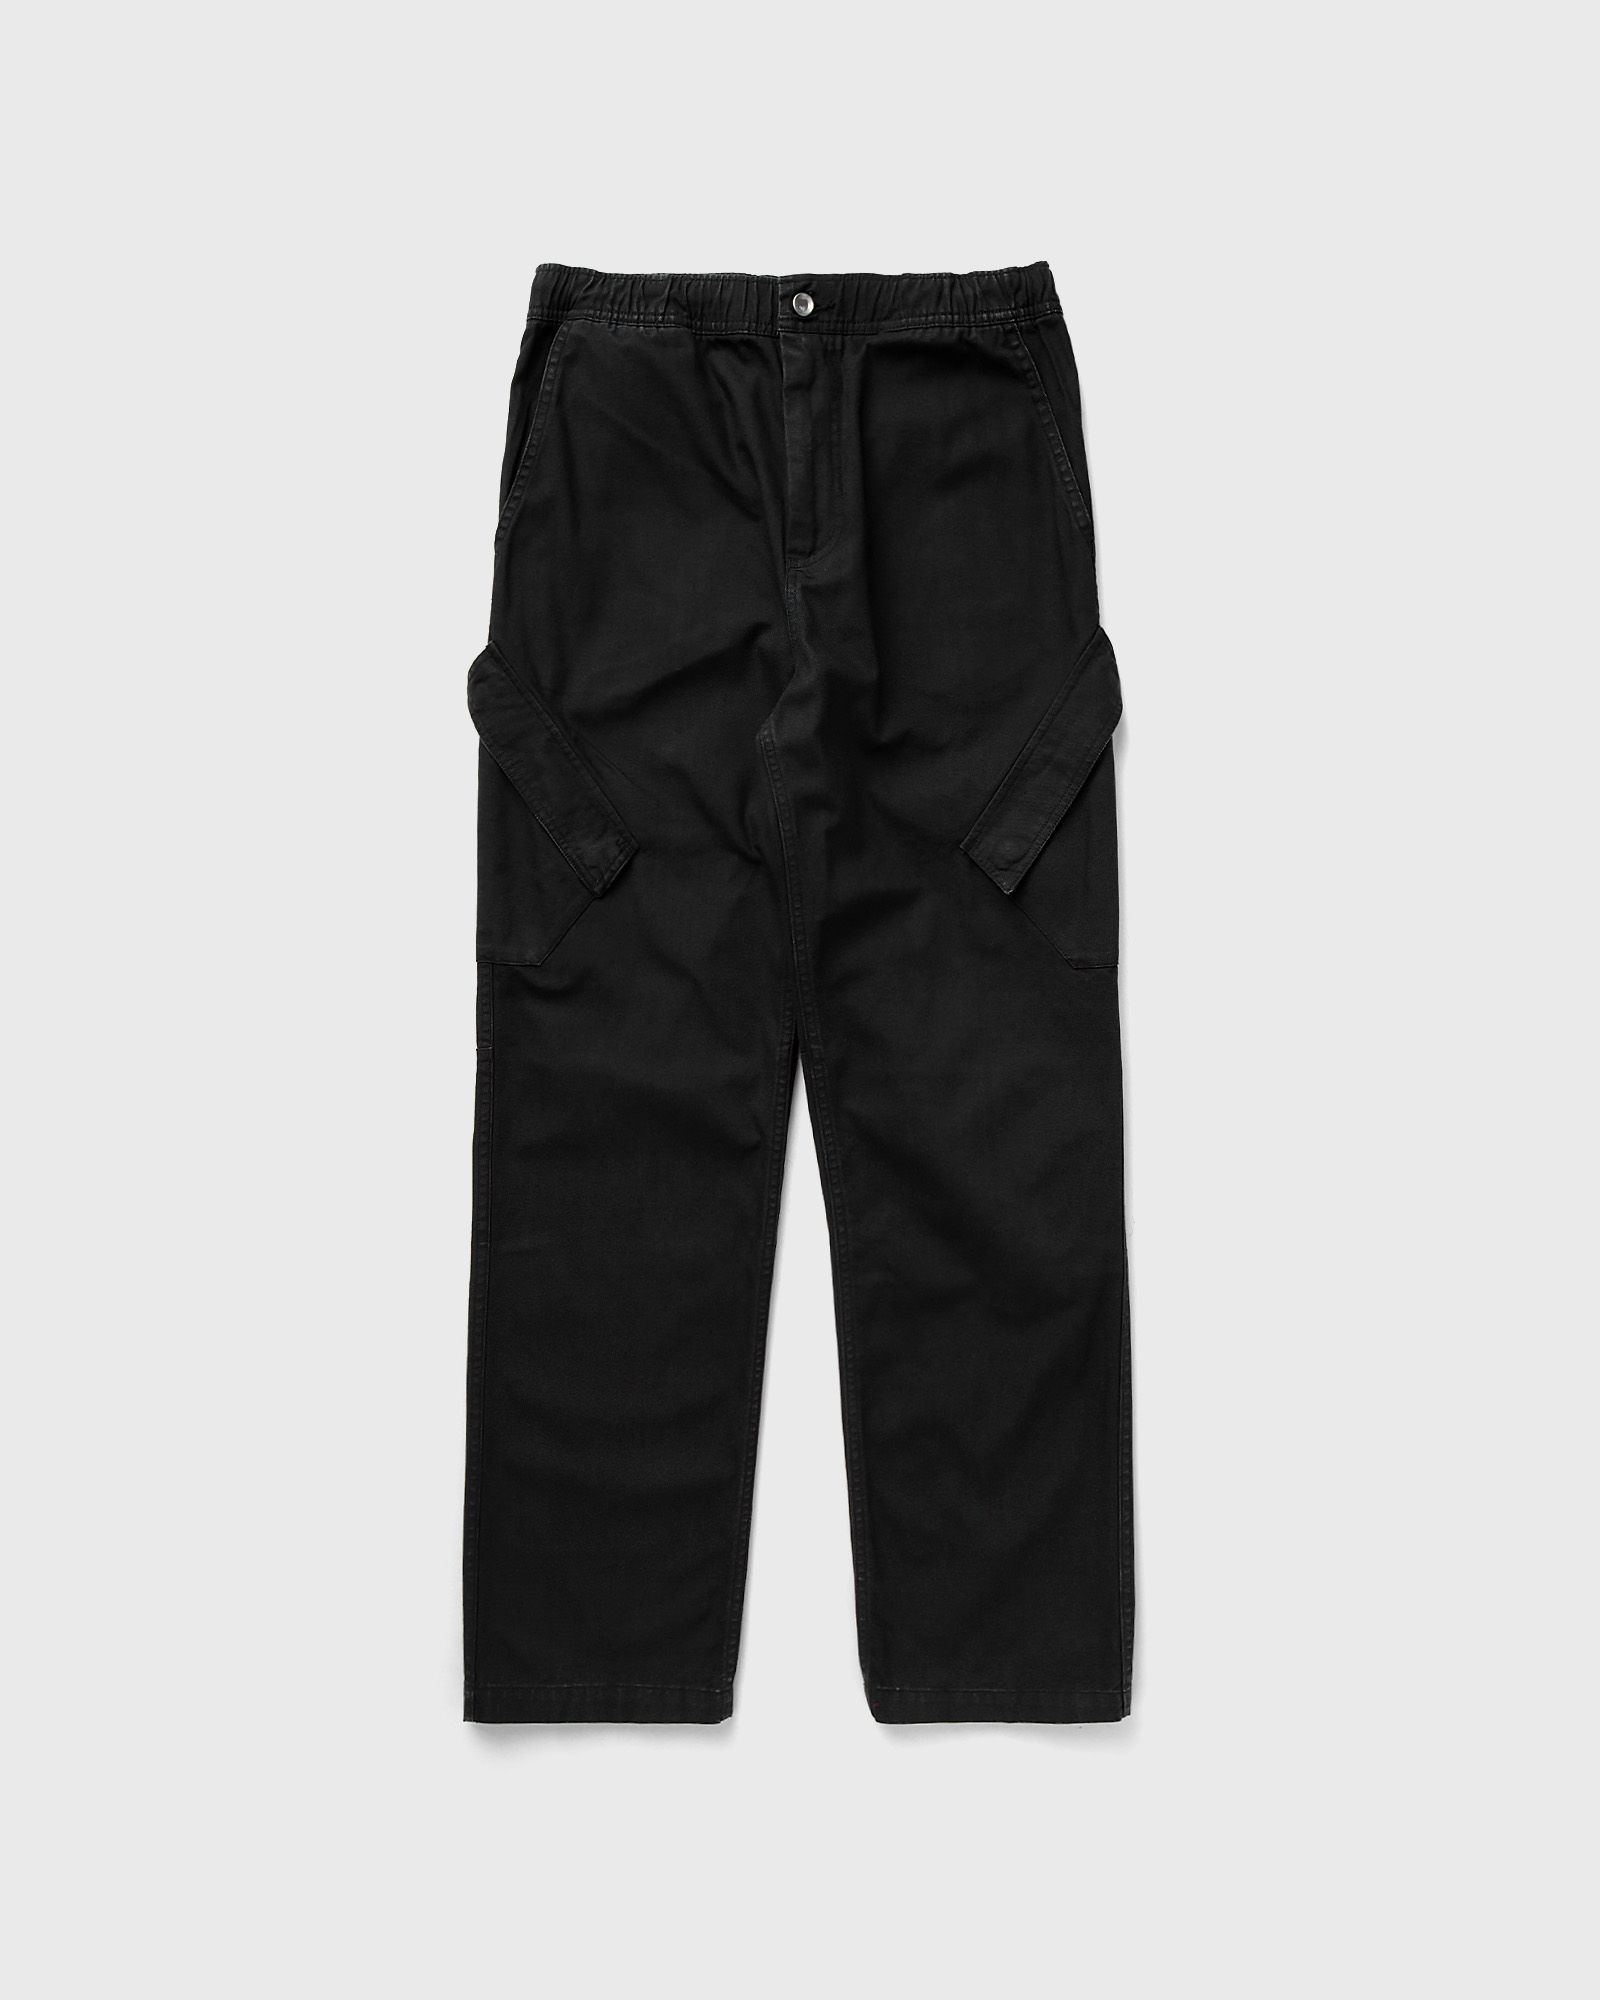 Jordan - essentials chicago pants men cargo pants black in größe:xl